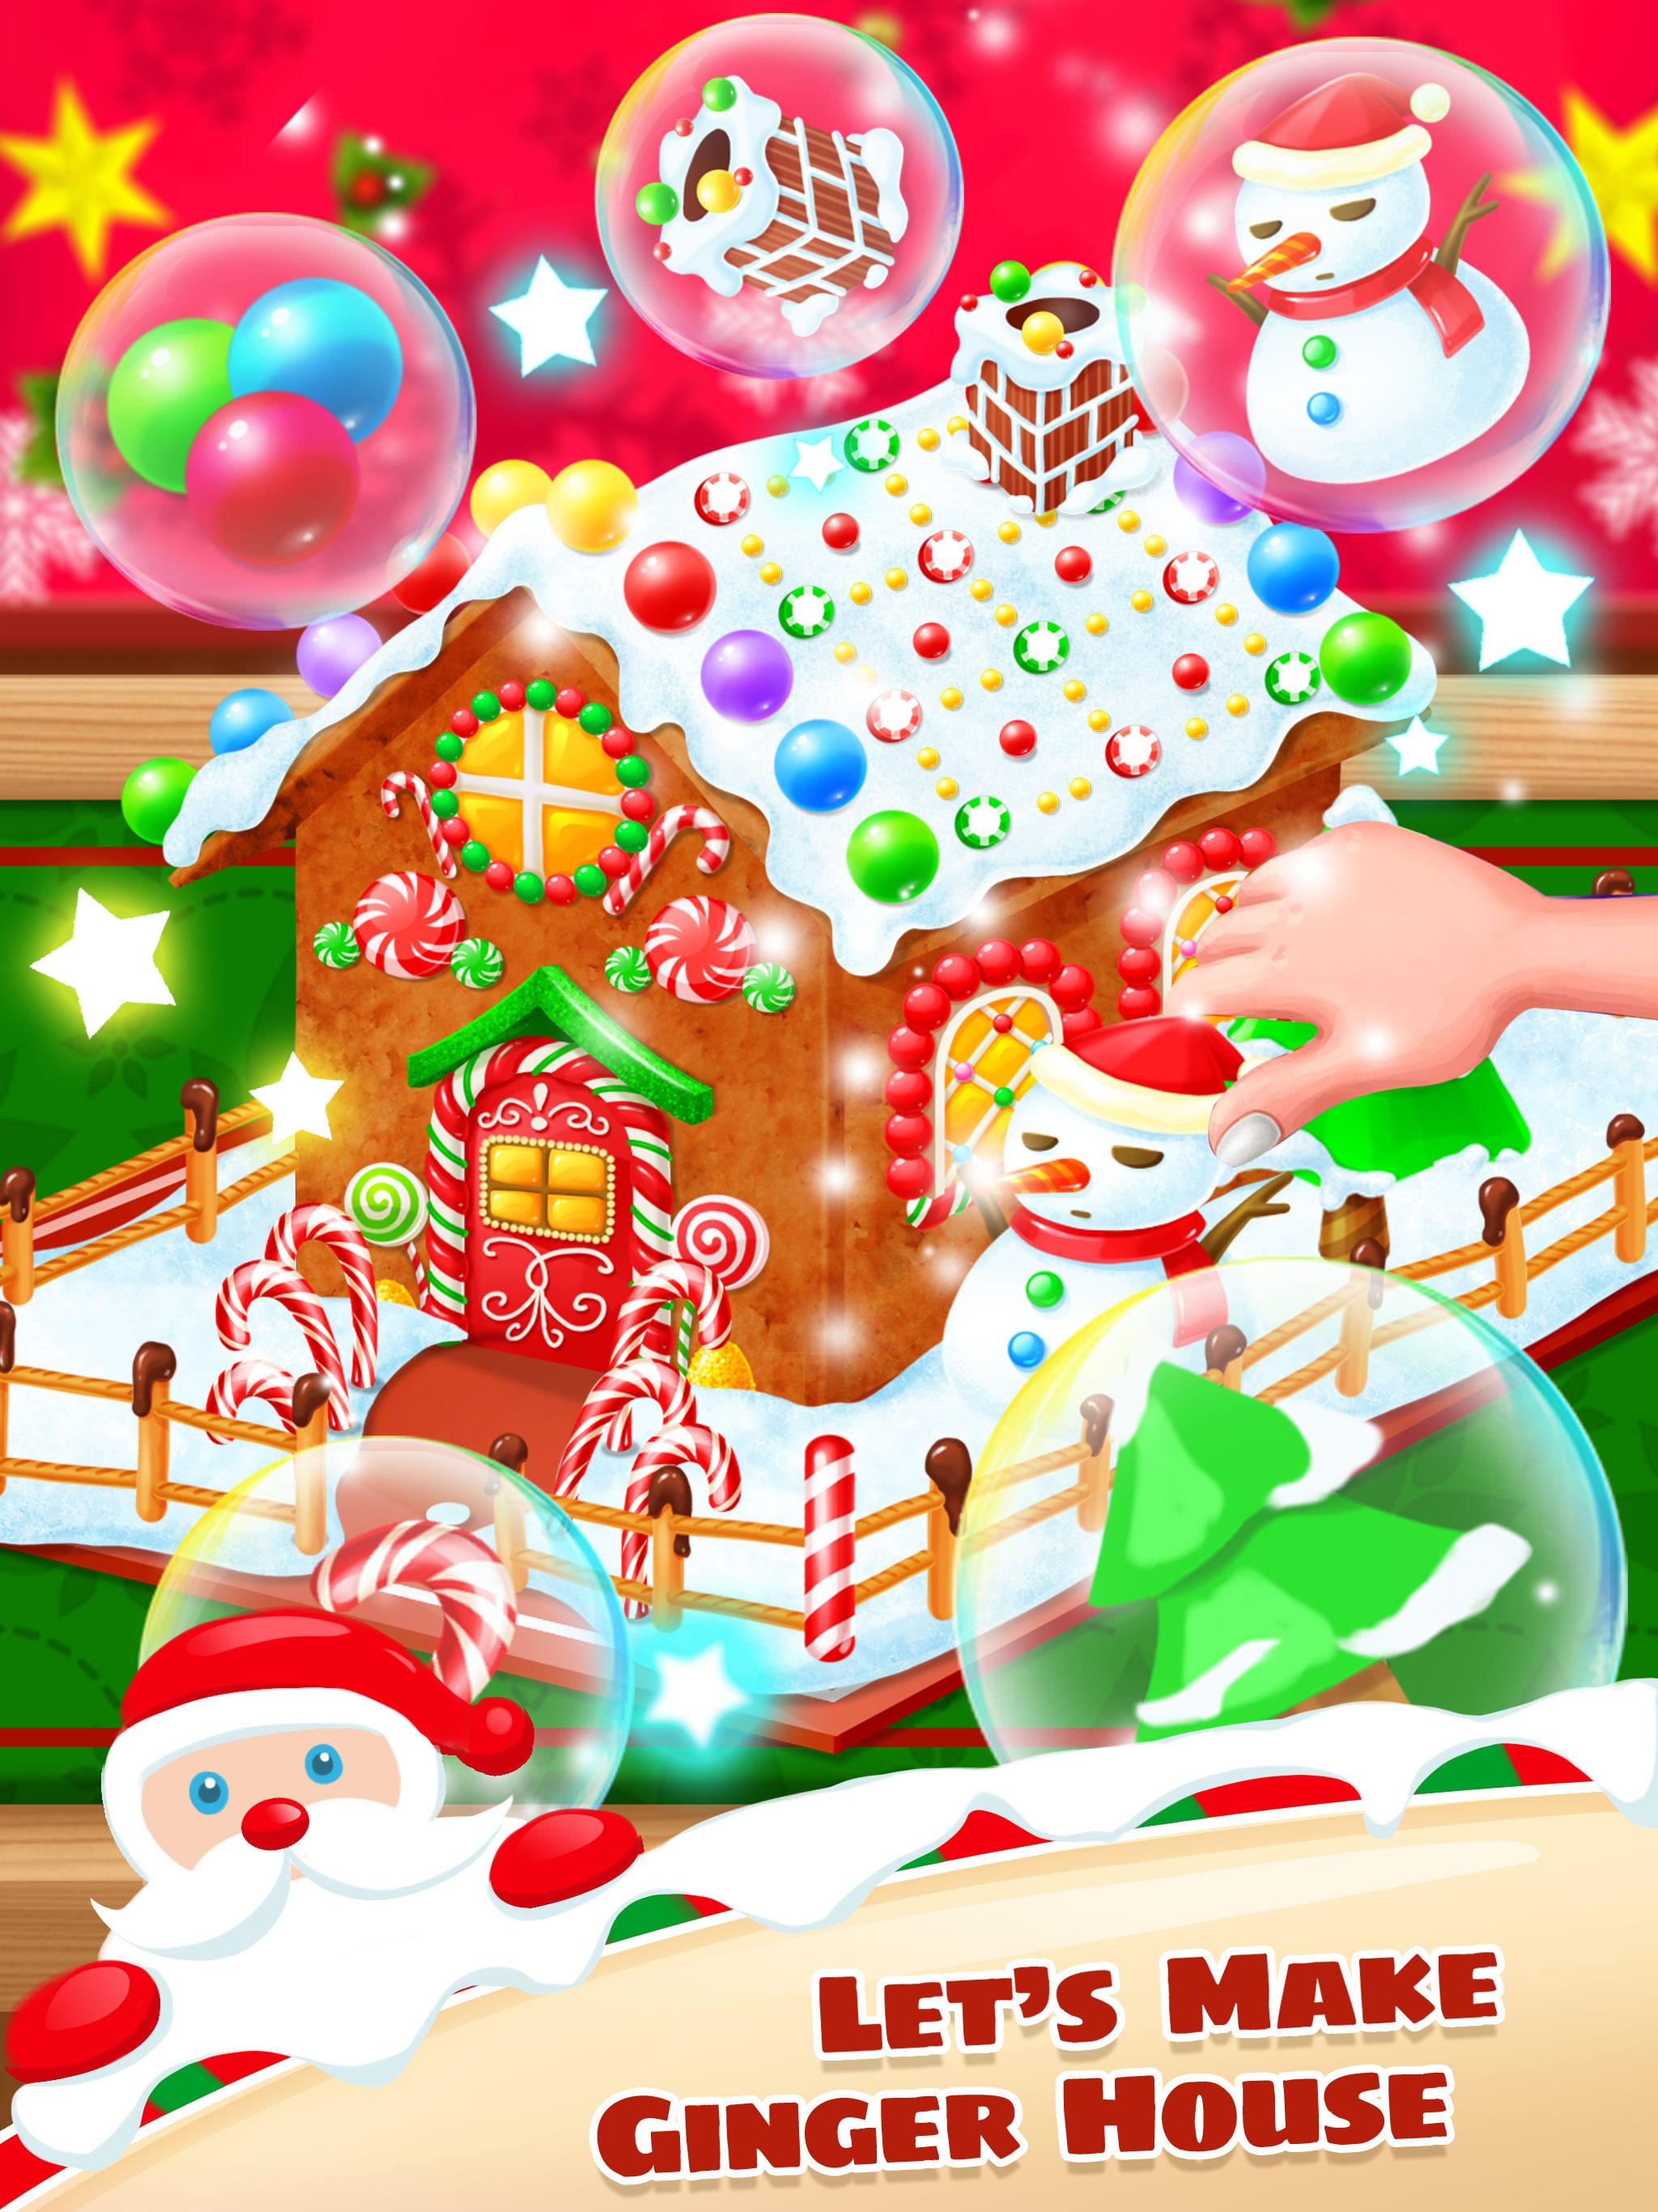 Christmas Cookies Party - Sweet Desserts 1.0 Screenshot 7